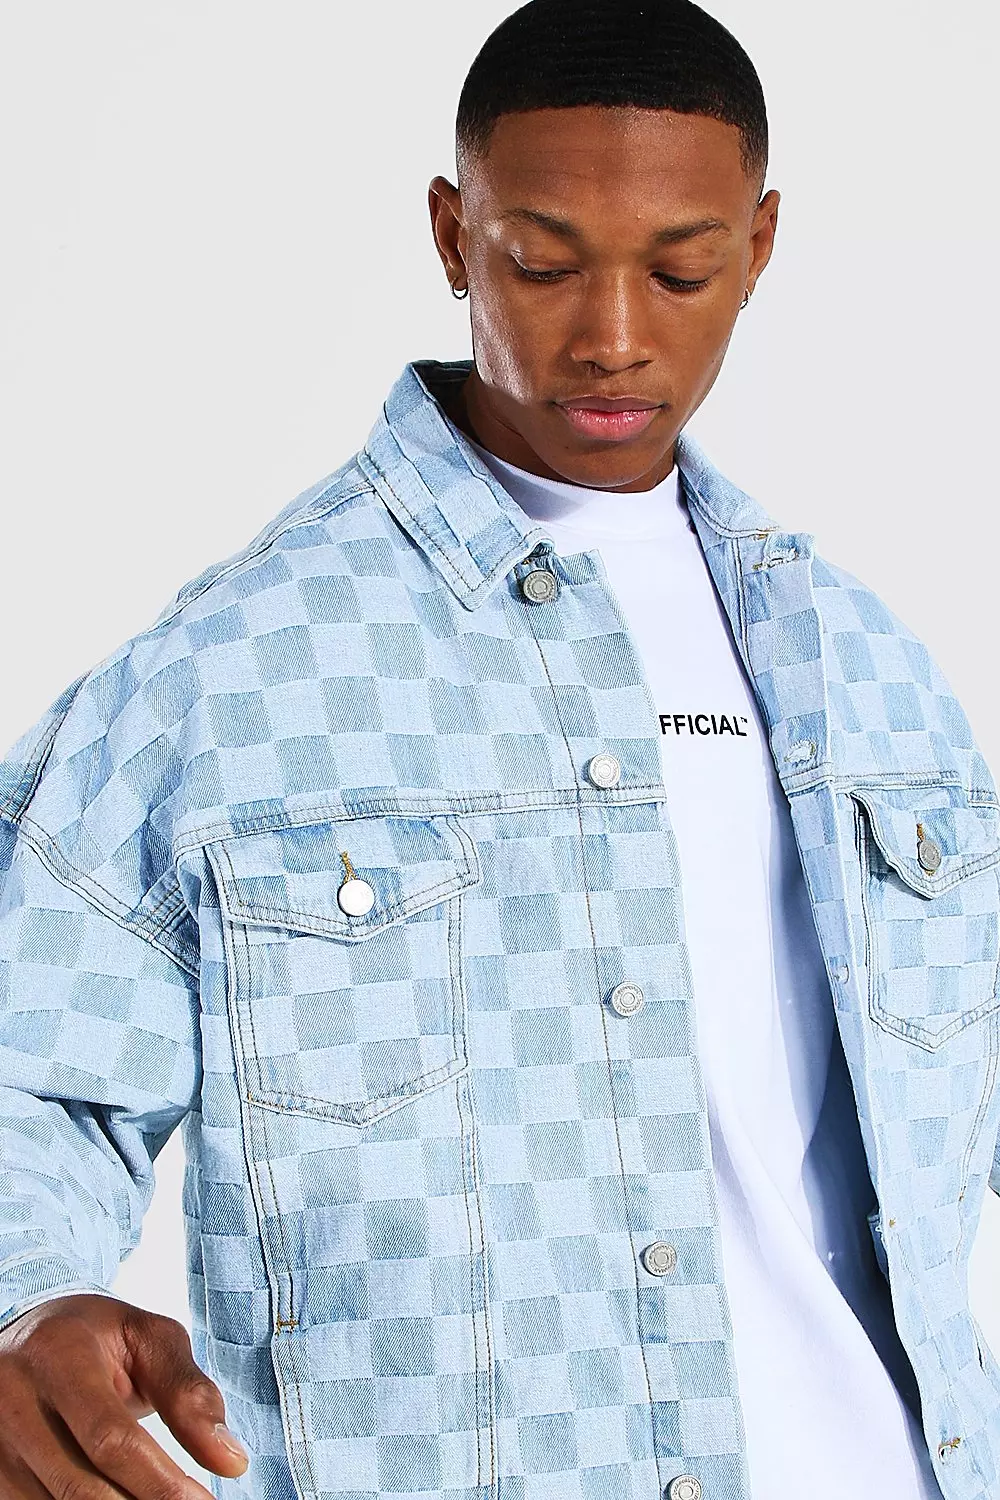 Blue Checkerboard Jacket For Men Fall Retro Trend Lapel Denim